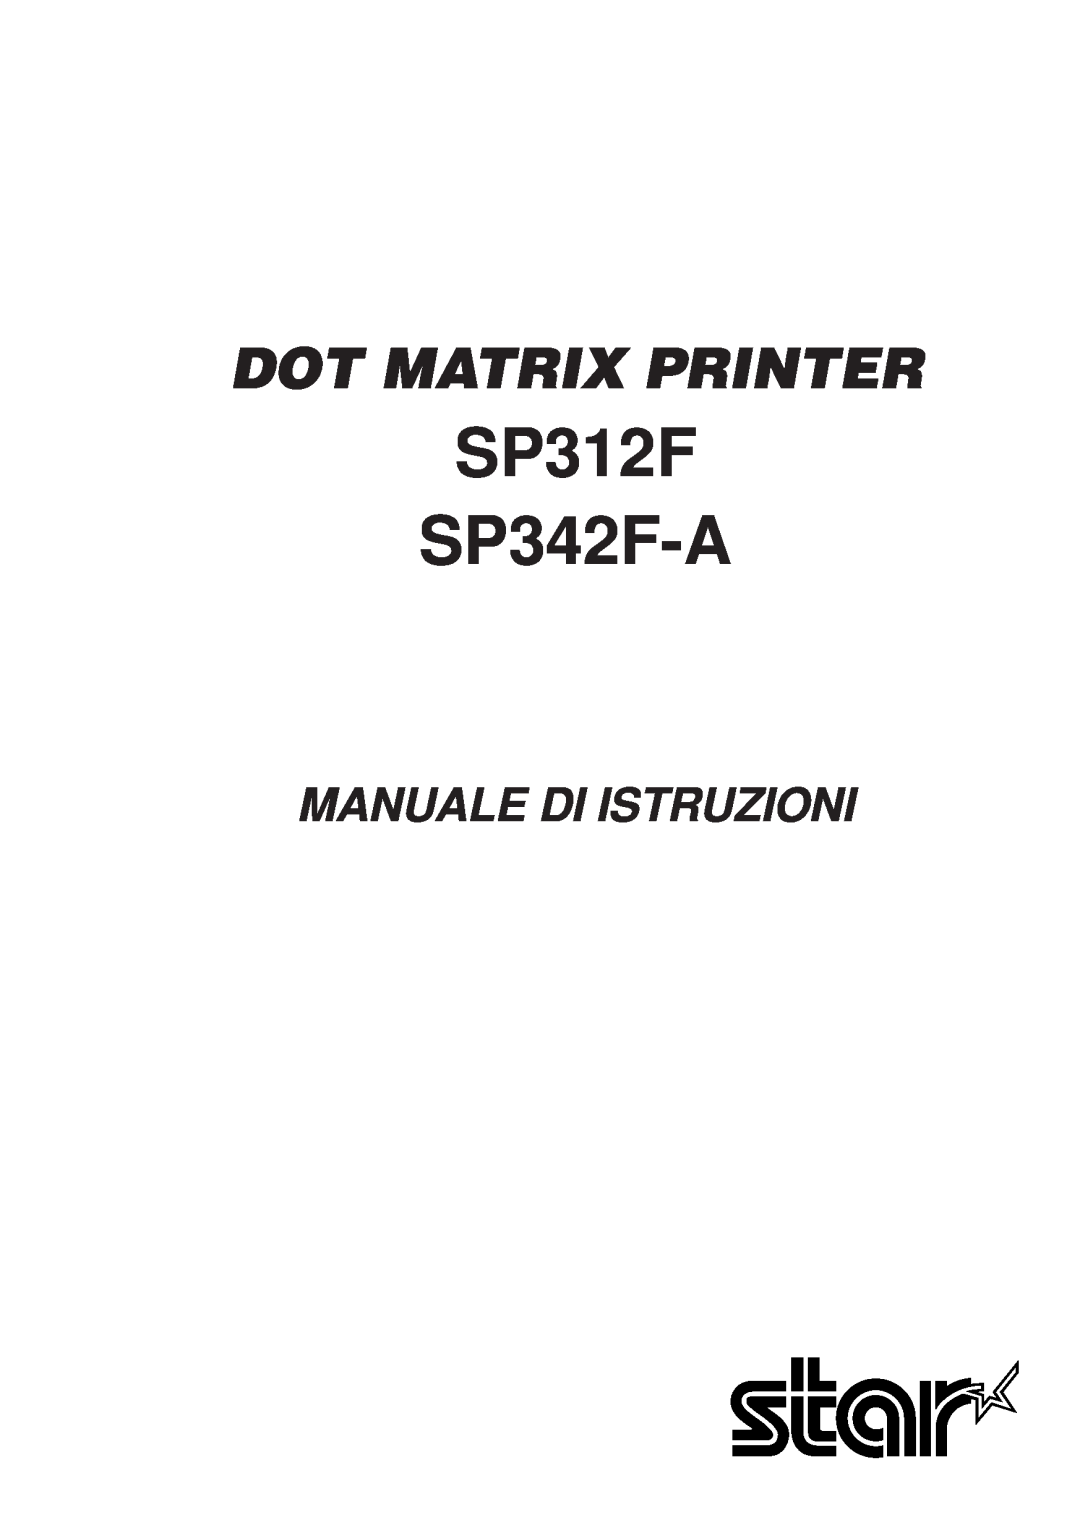 Star Micronics manual SP312F SP342F-A, Dot Matrix Printer, Manuale Di Istruzioni 